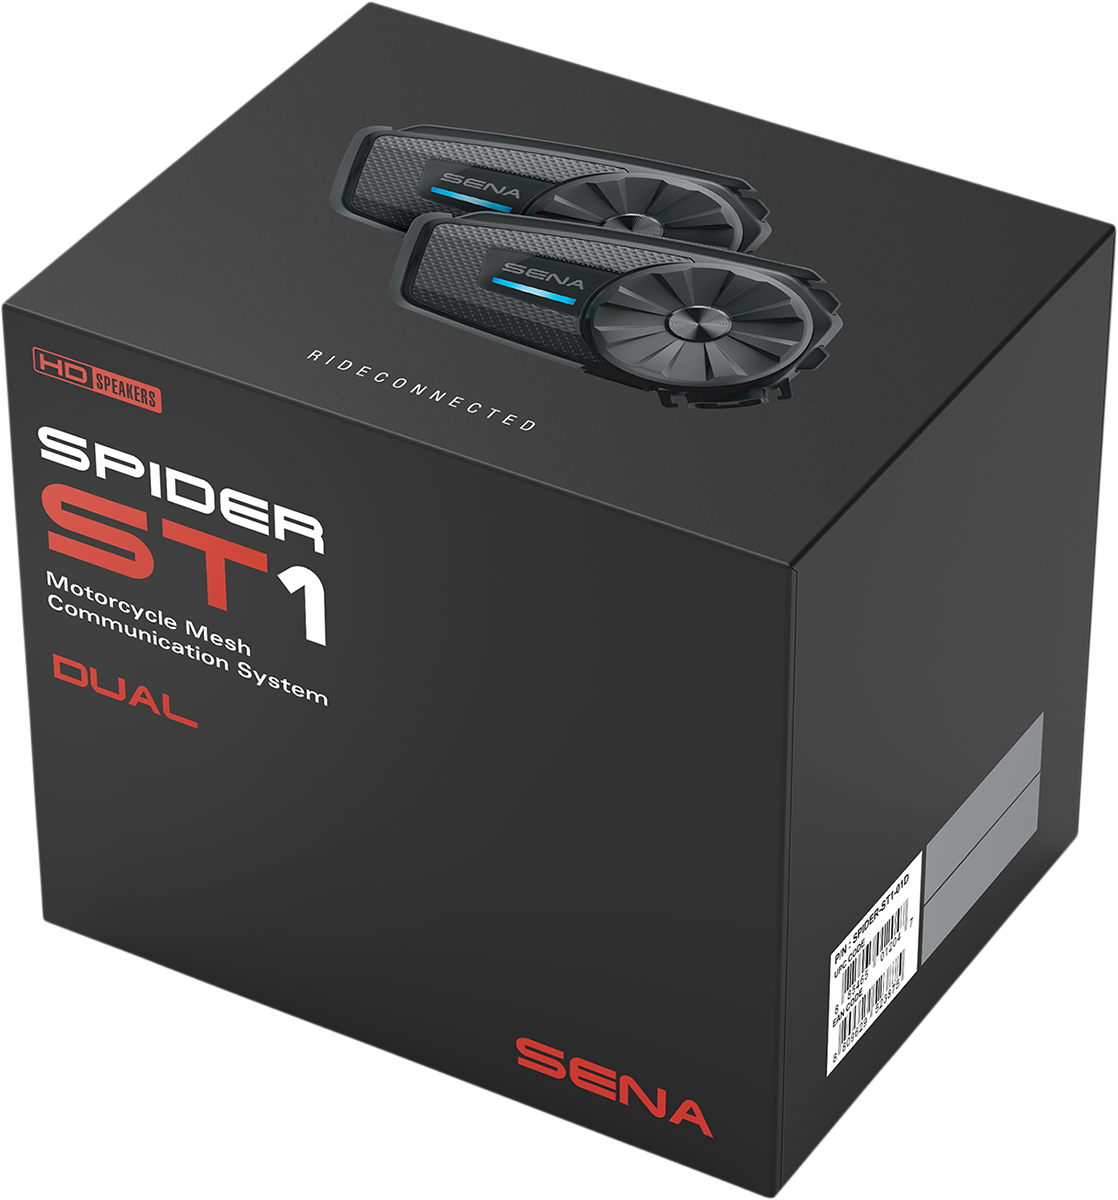 SENA Spider ST1 Communication System - Dual Pack